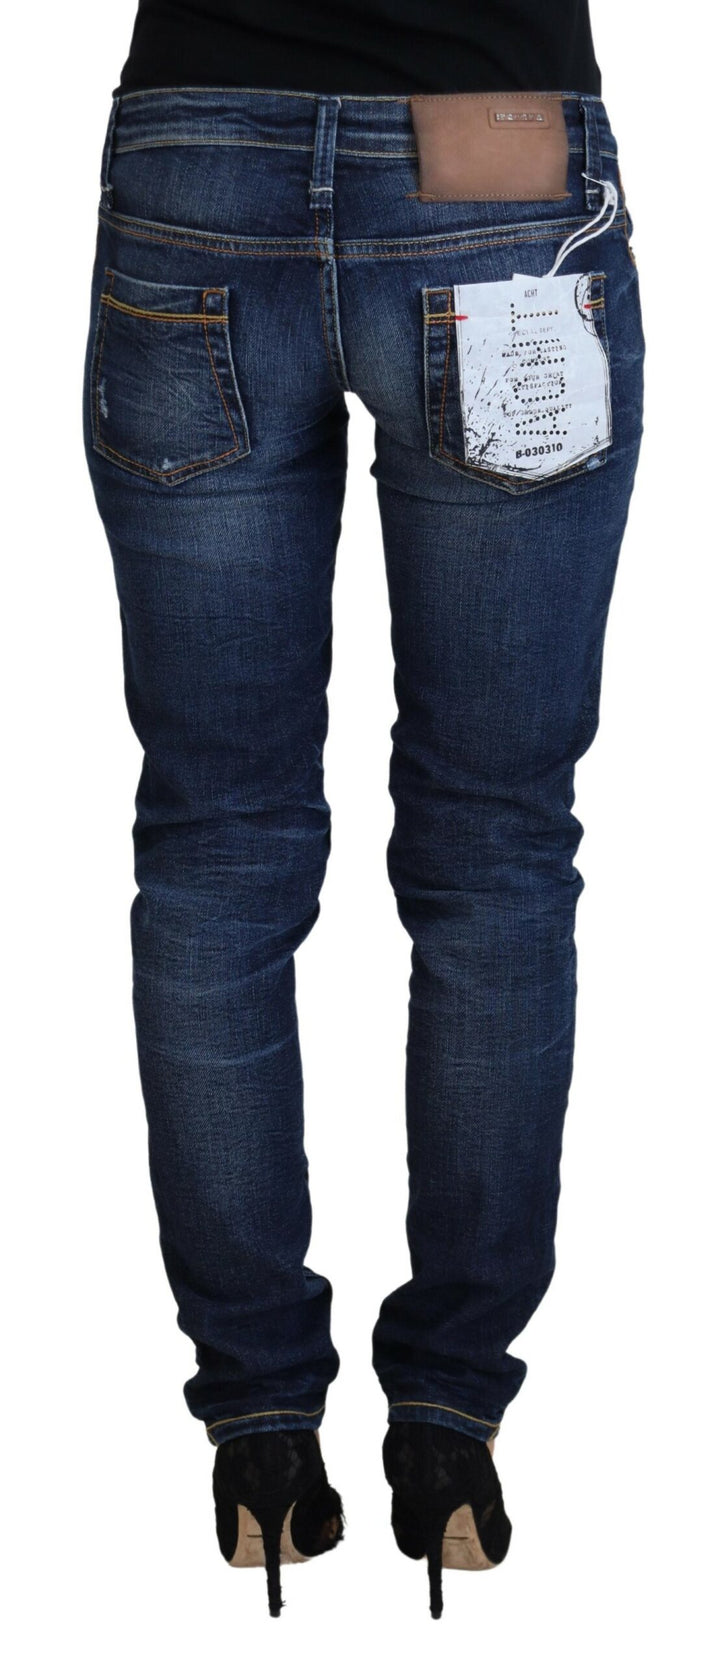 Acht Chic Low Waist Designer Skinny Jeans